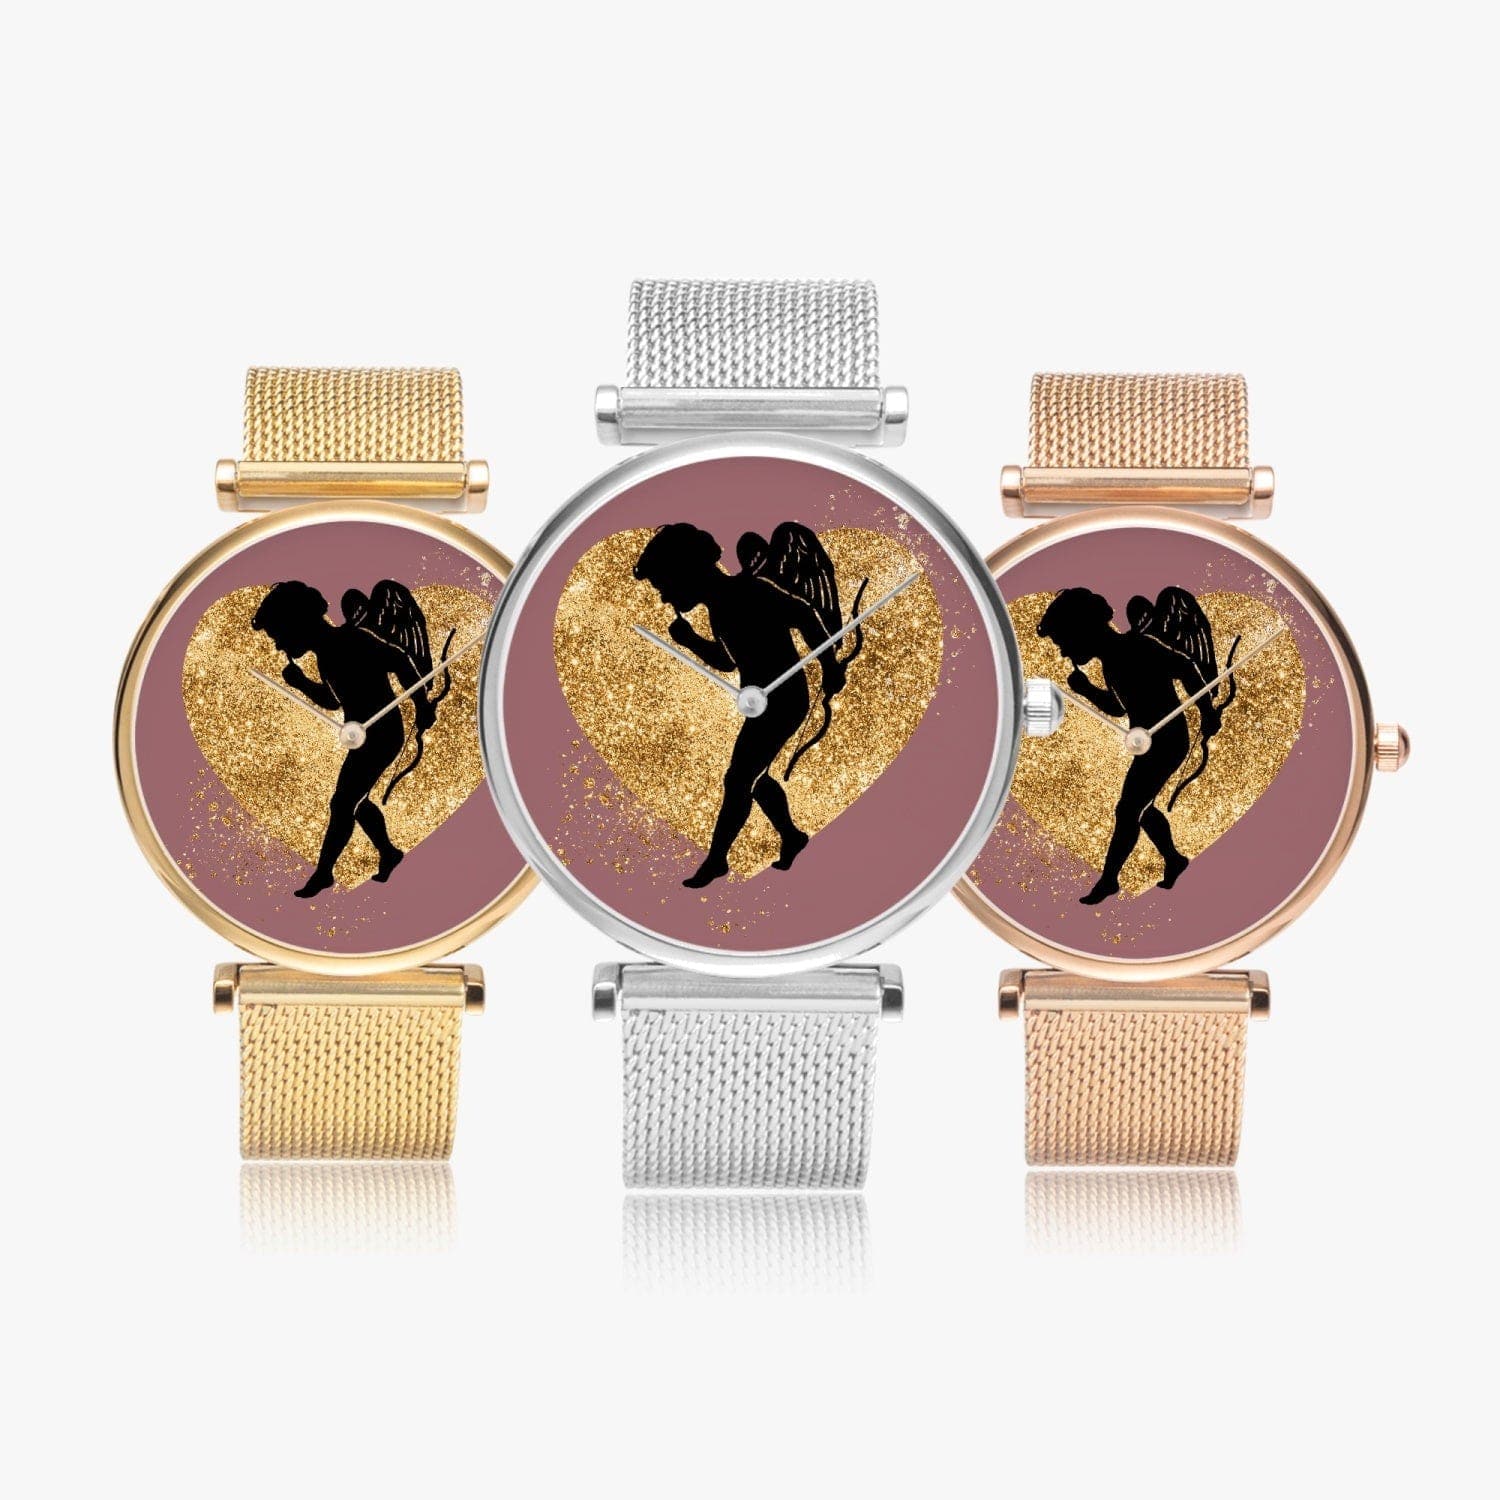 Cupid and the golden heart,  New Stylish Ultra-Thin Quartz Watch, designed by Sensus Studio Design